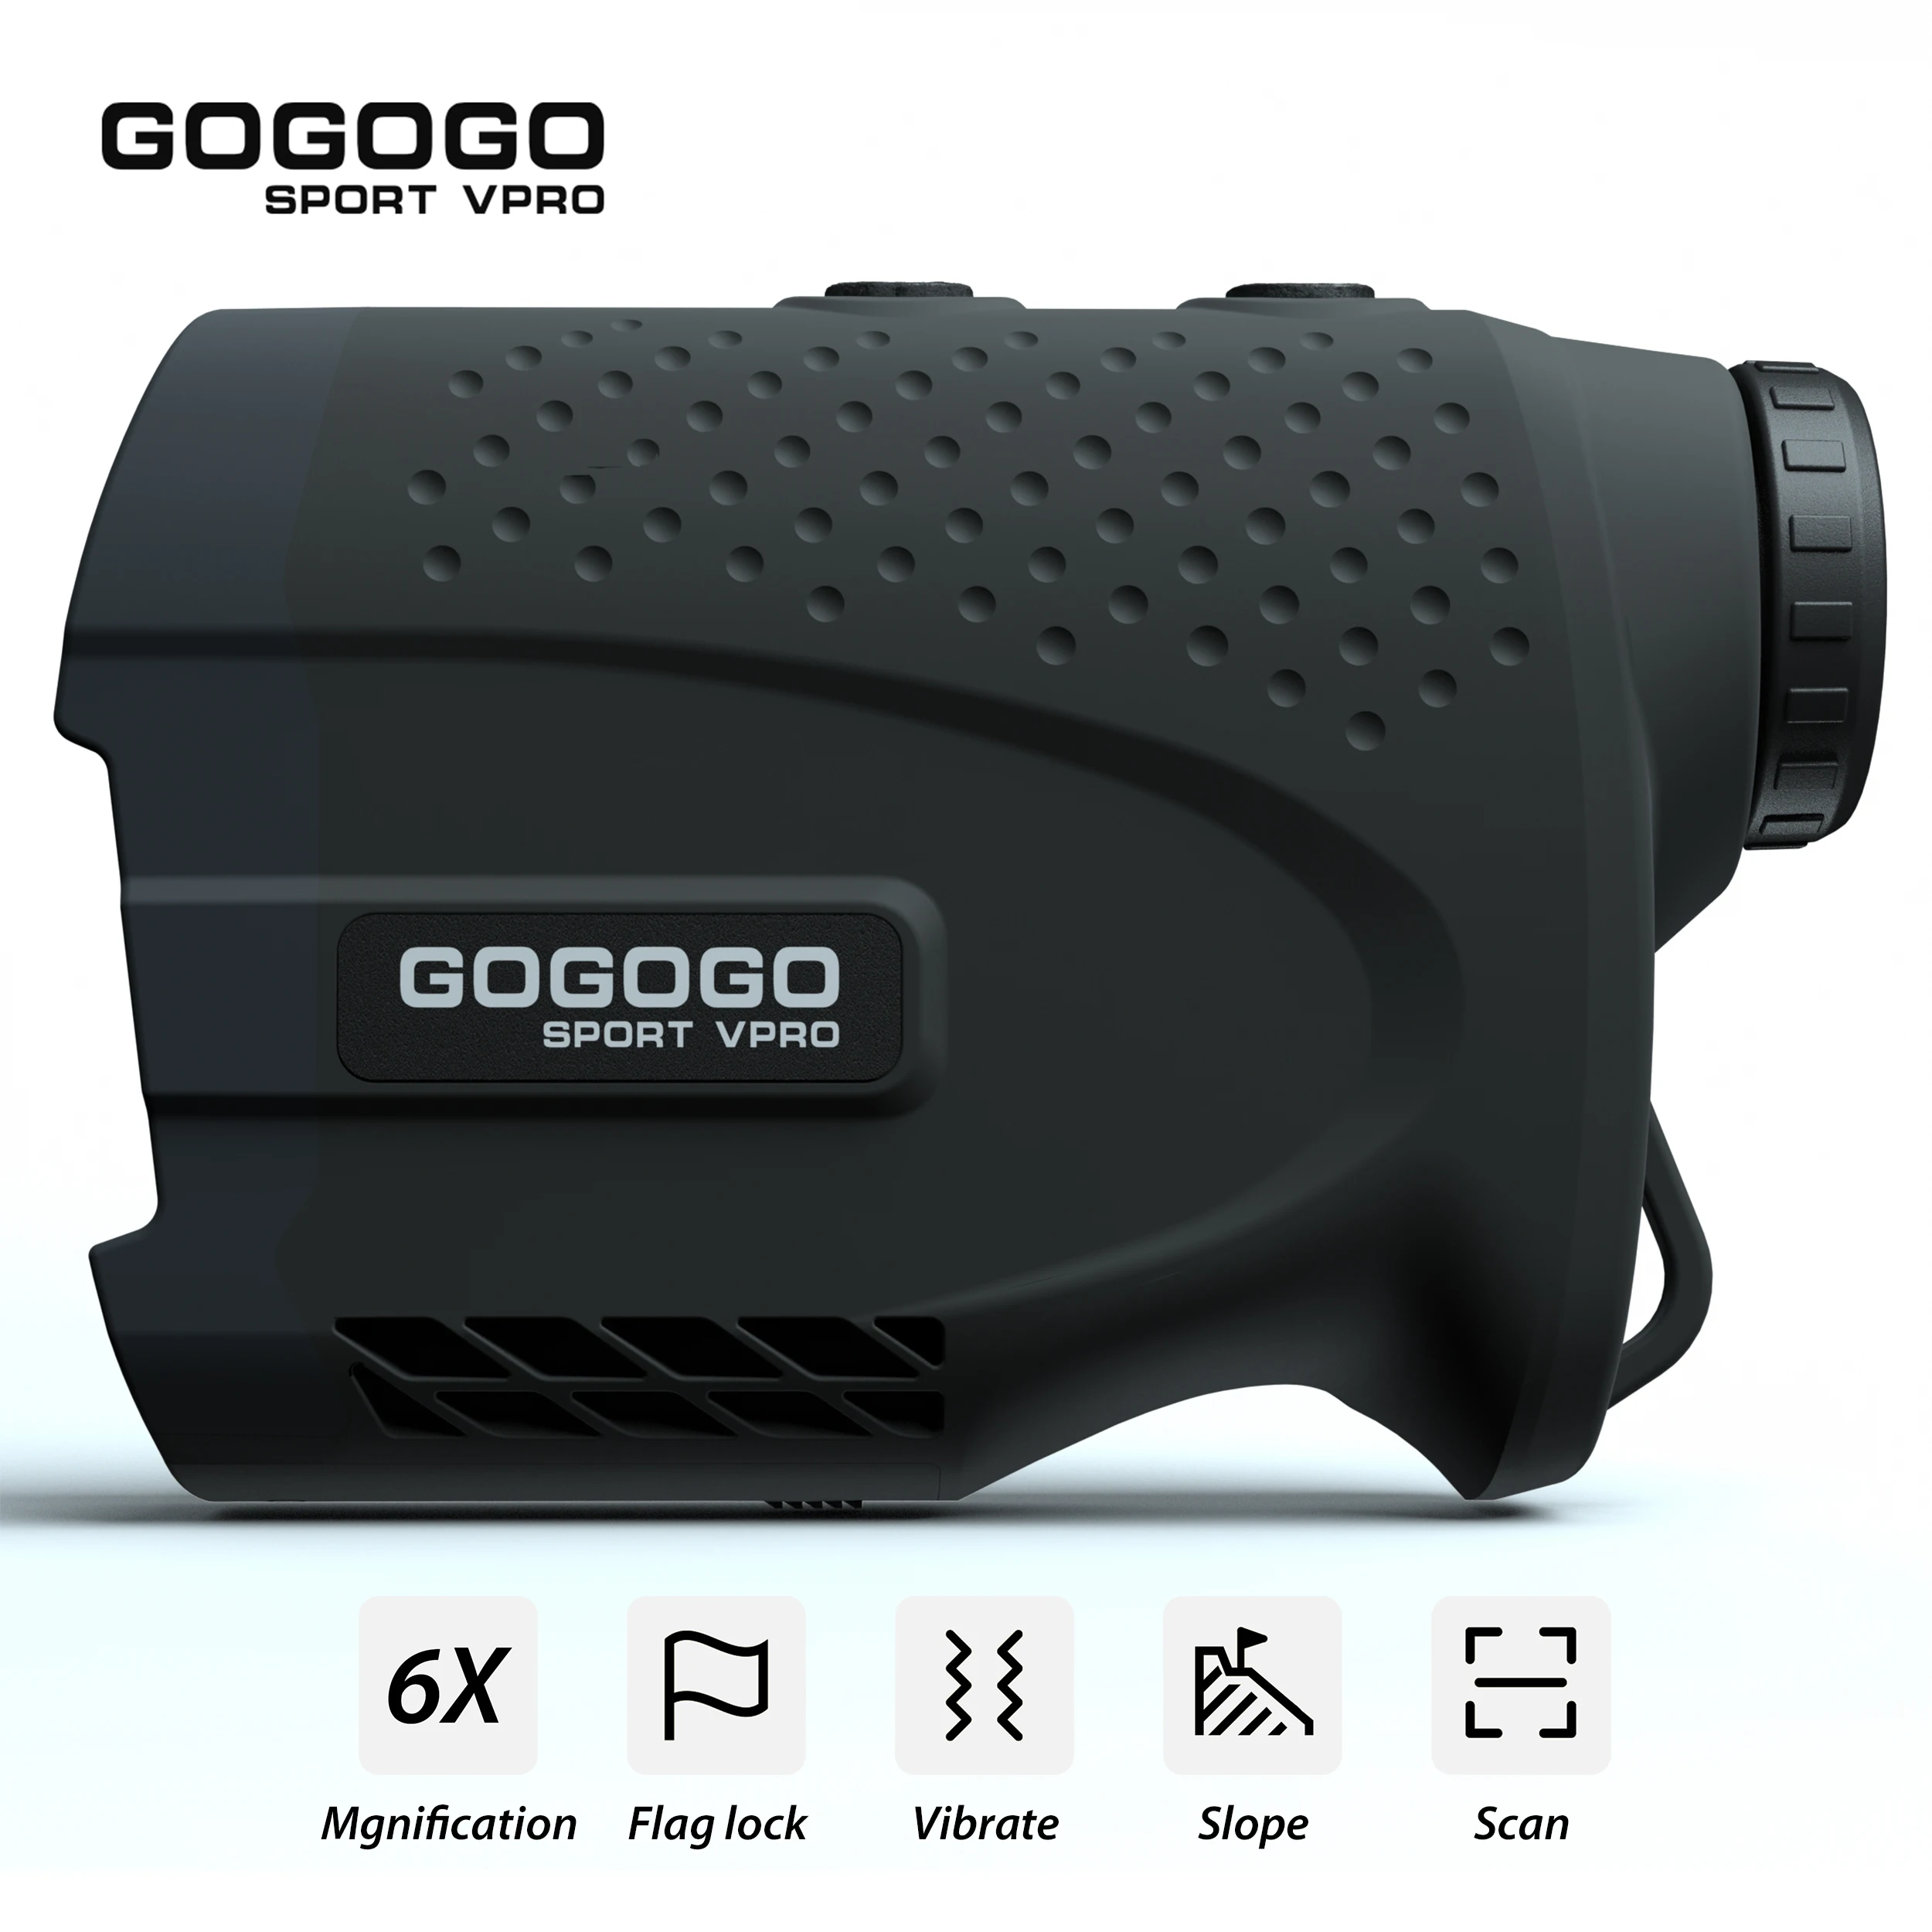 Gogogo Sport Vpro Pengintai Laser Digital untuk Golf Pencari Jarak Berburu 900m Teleskop 6X dengan Kemiringan Jarak Horizontal GS24B - 0